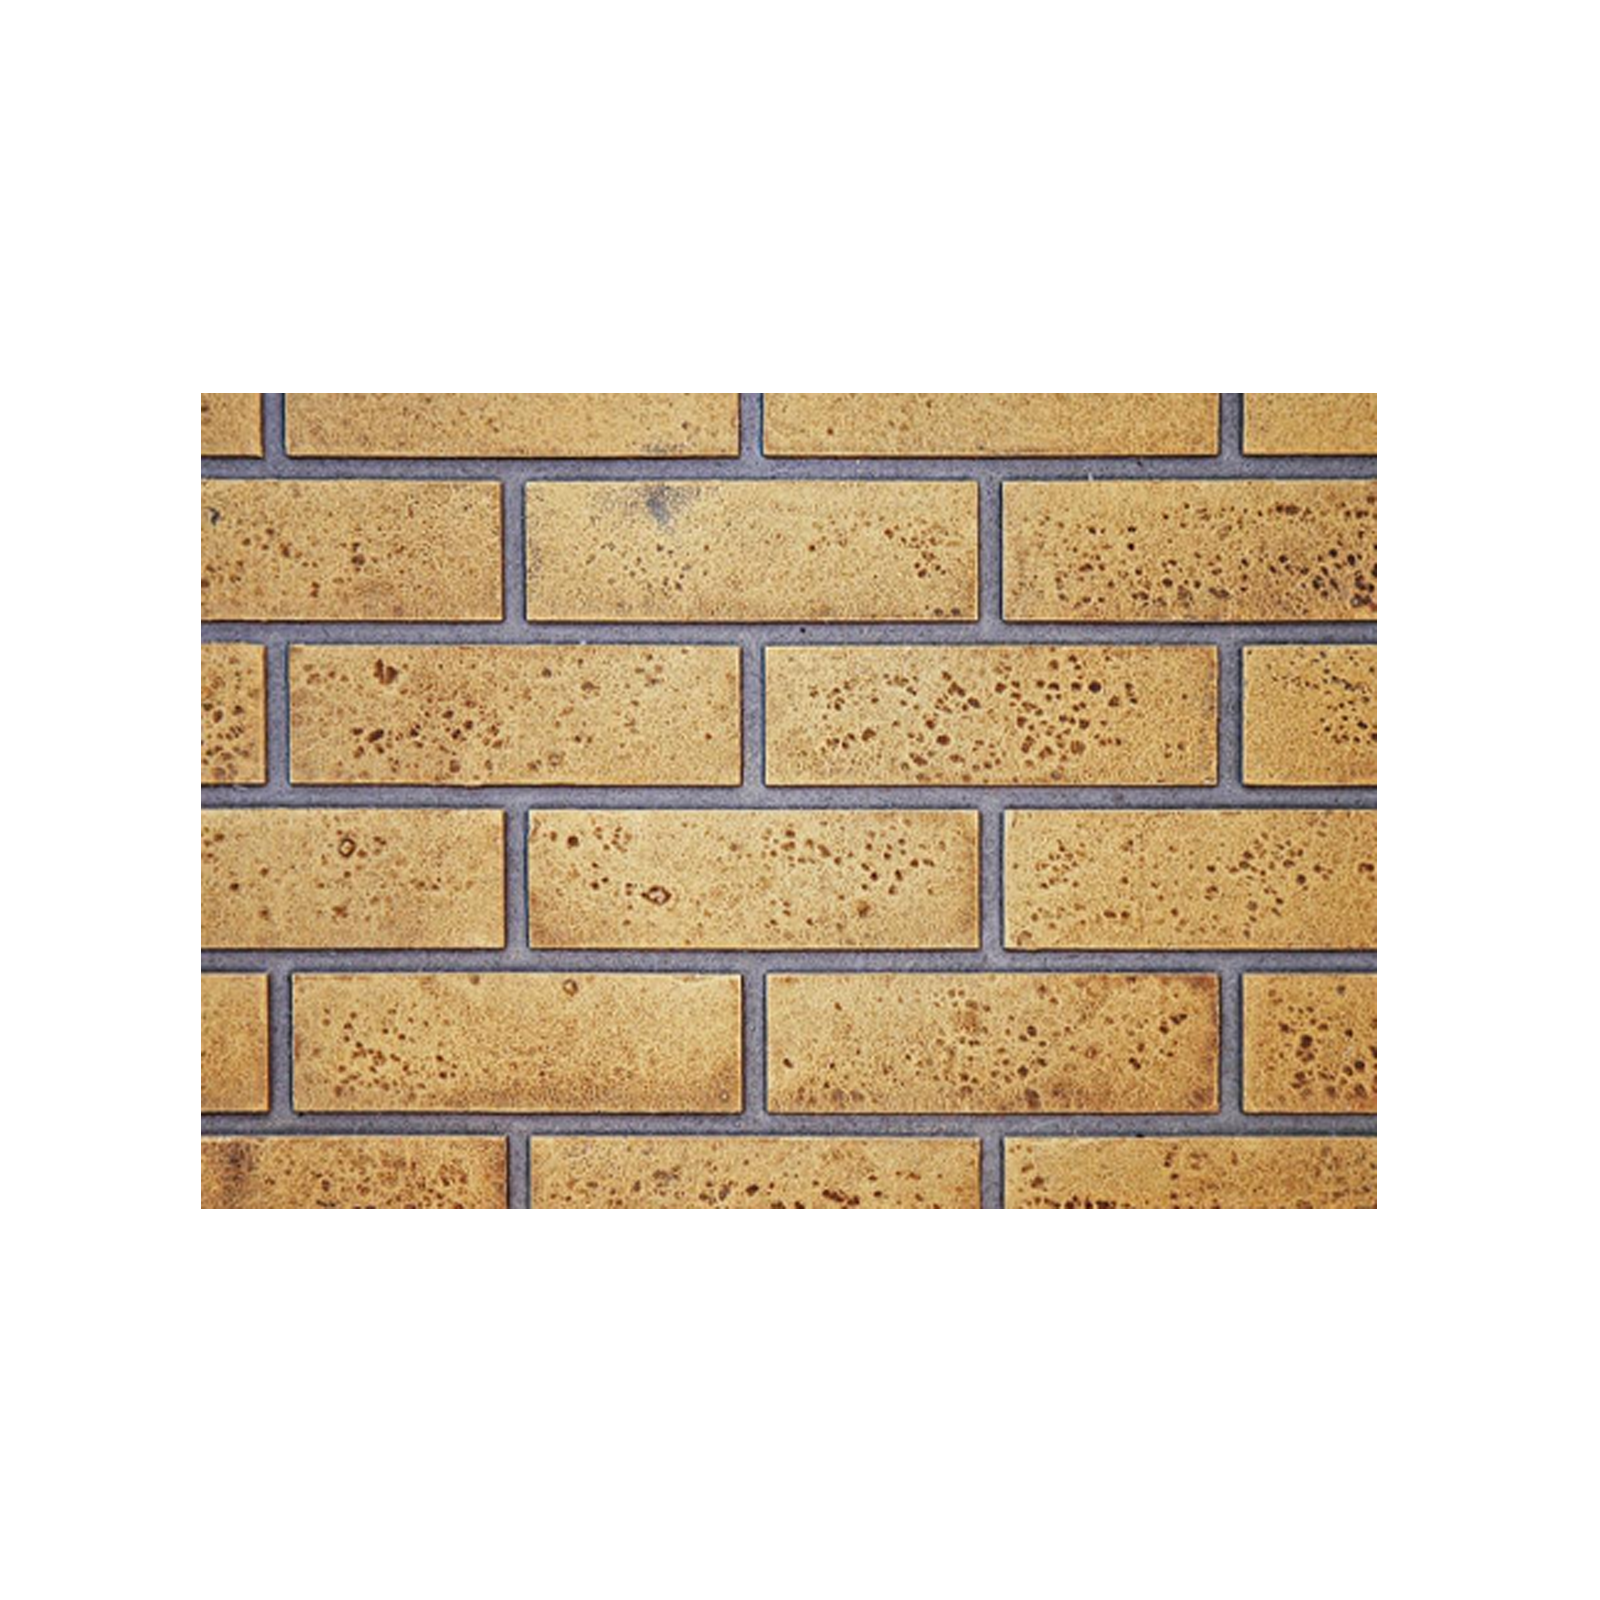 Napoleon Sandstone Decorative Brick Panels - GD841KT